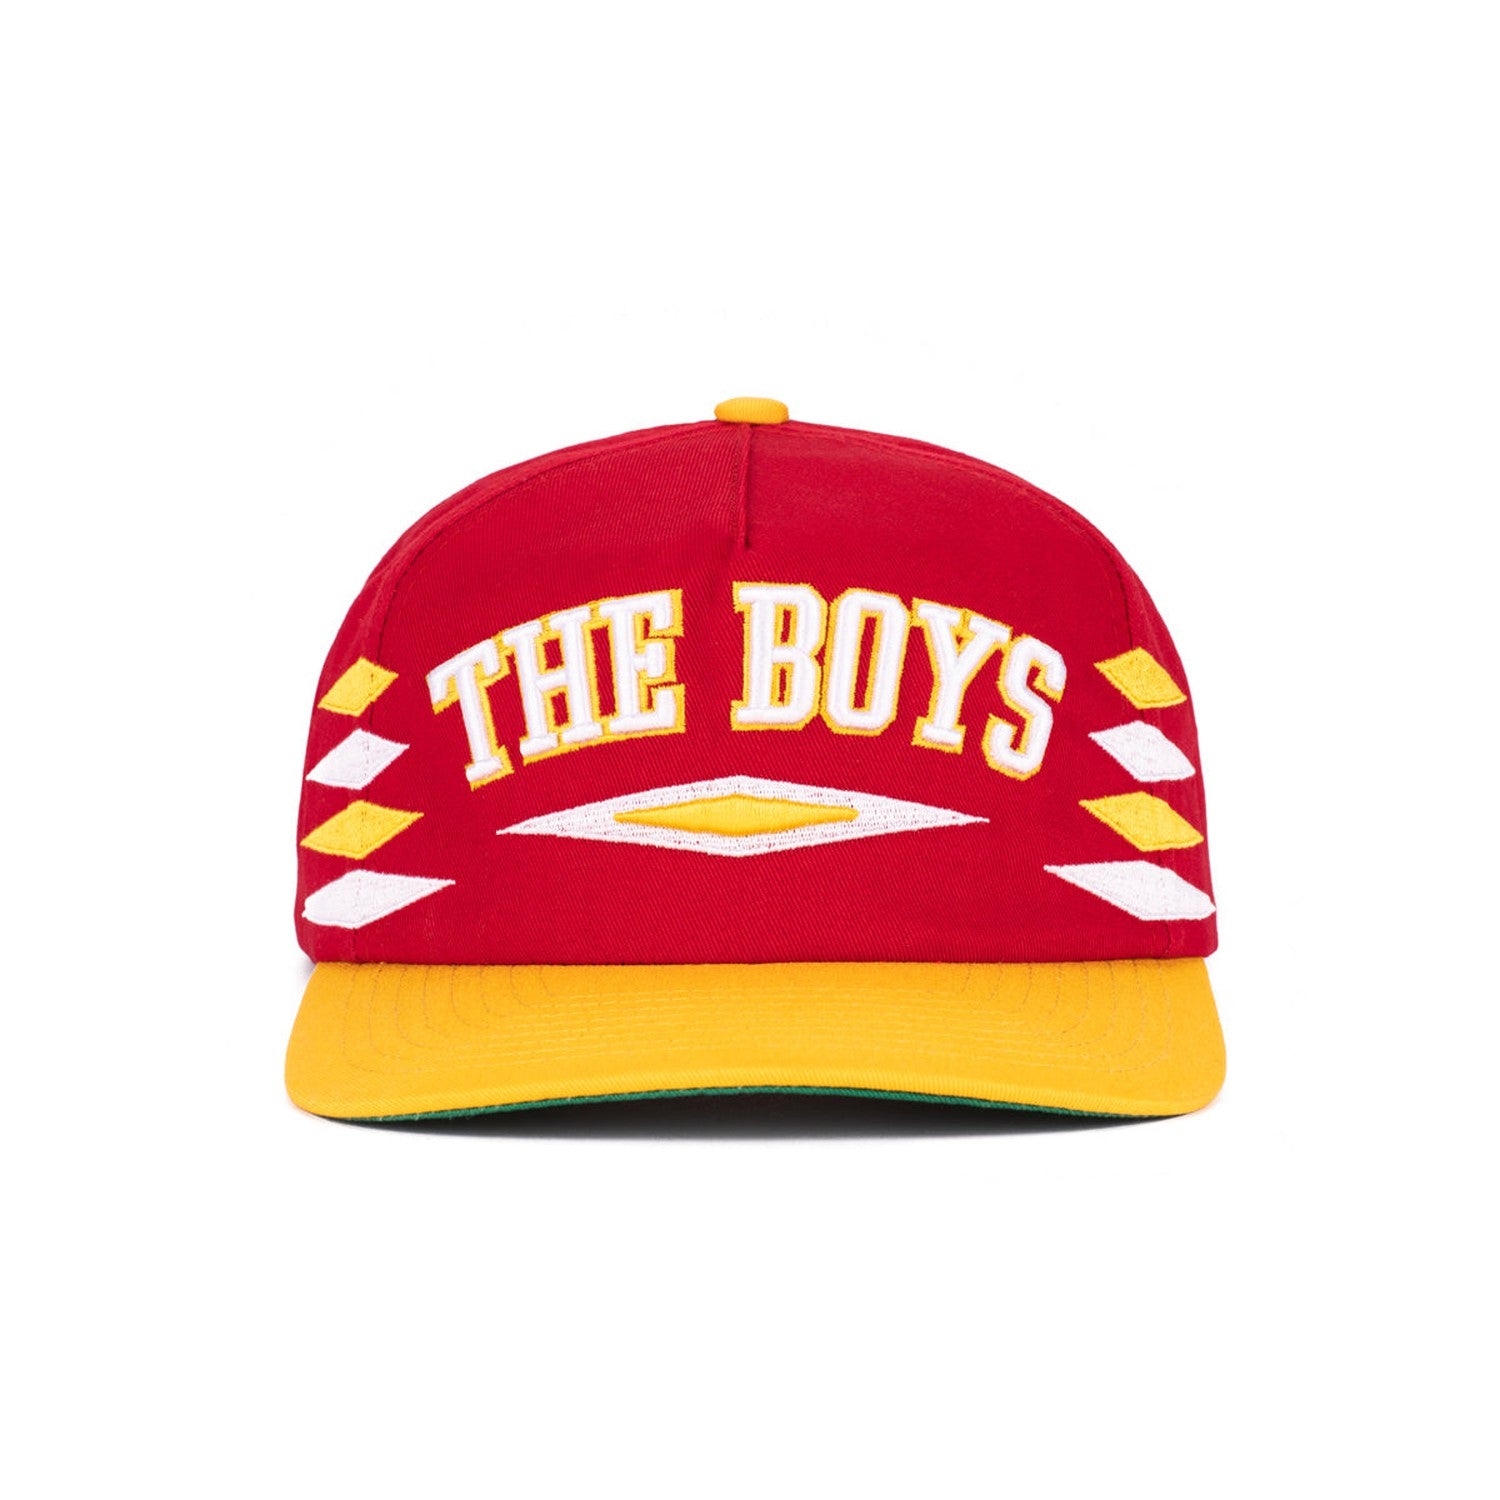 Men Retro Washed Baseball Cap Oversize Hat For Large/Big Head